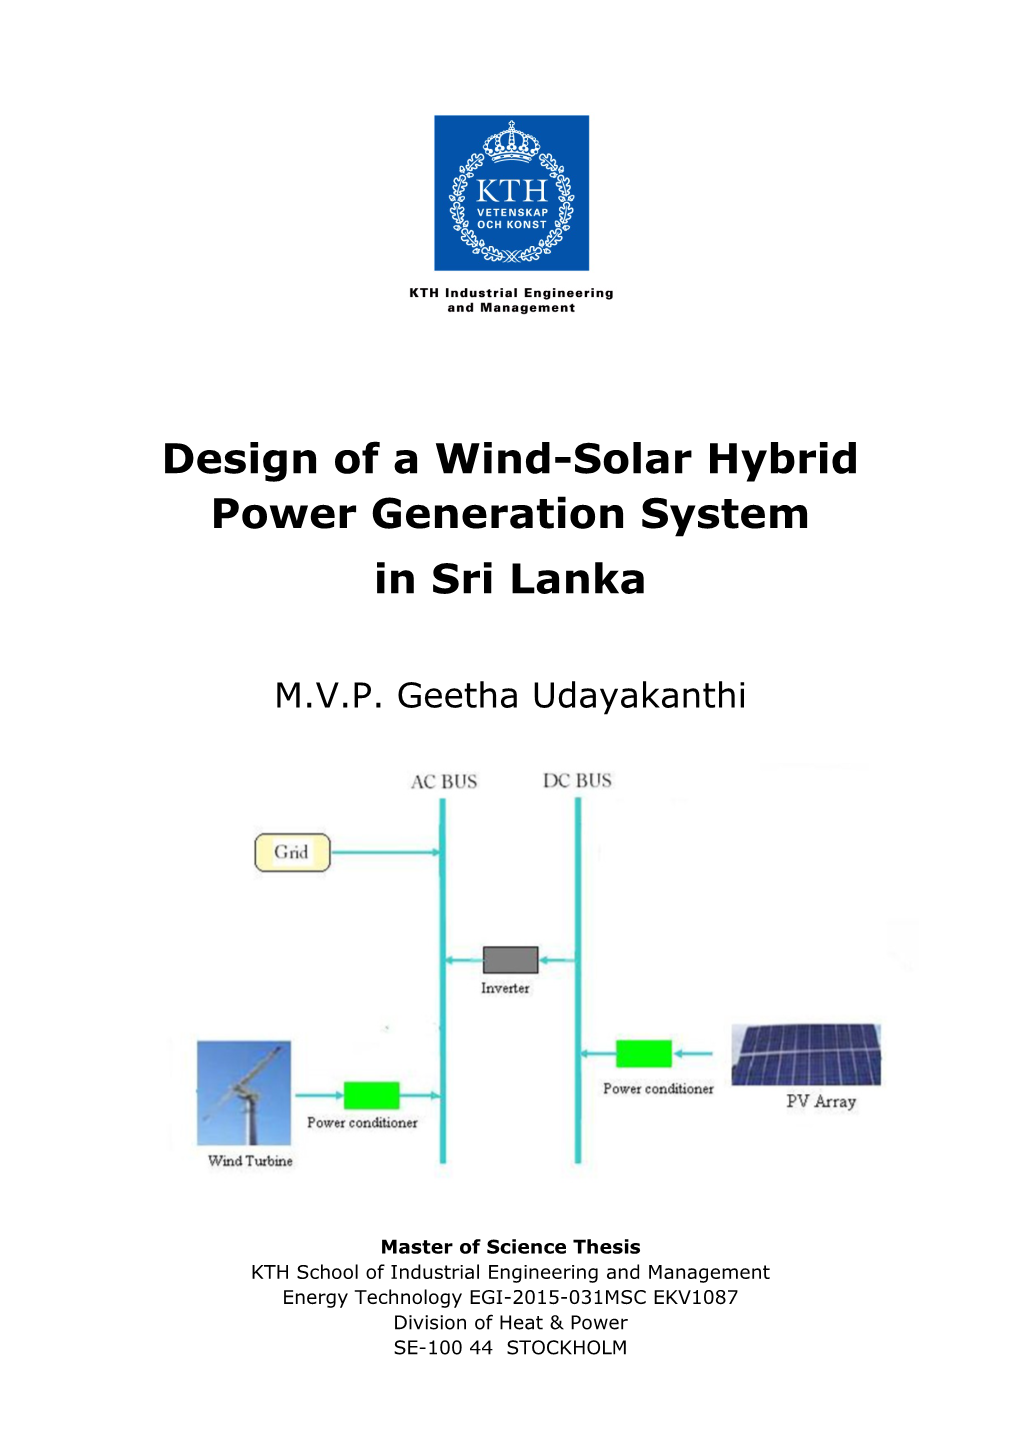 Design of a Wind-Solar Hybrid Power Generation System in Sri Lanka